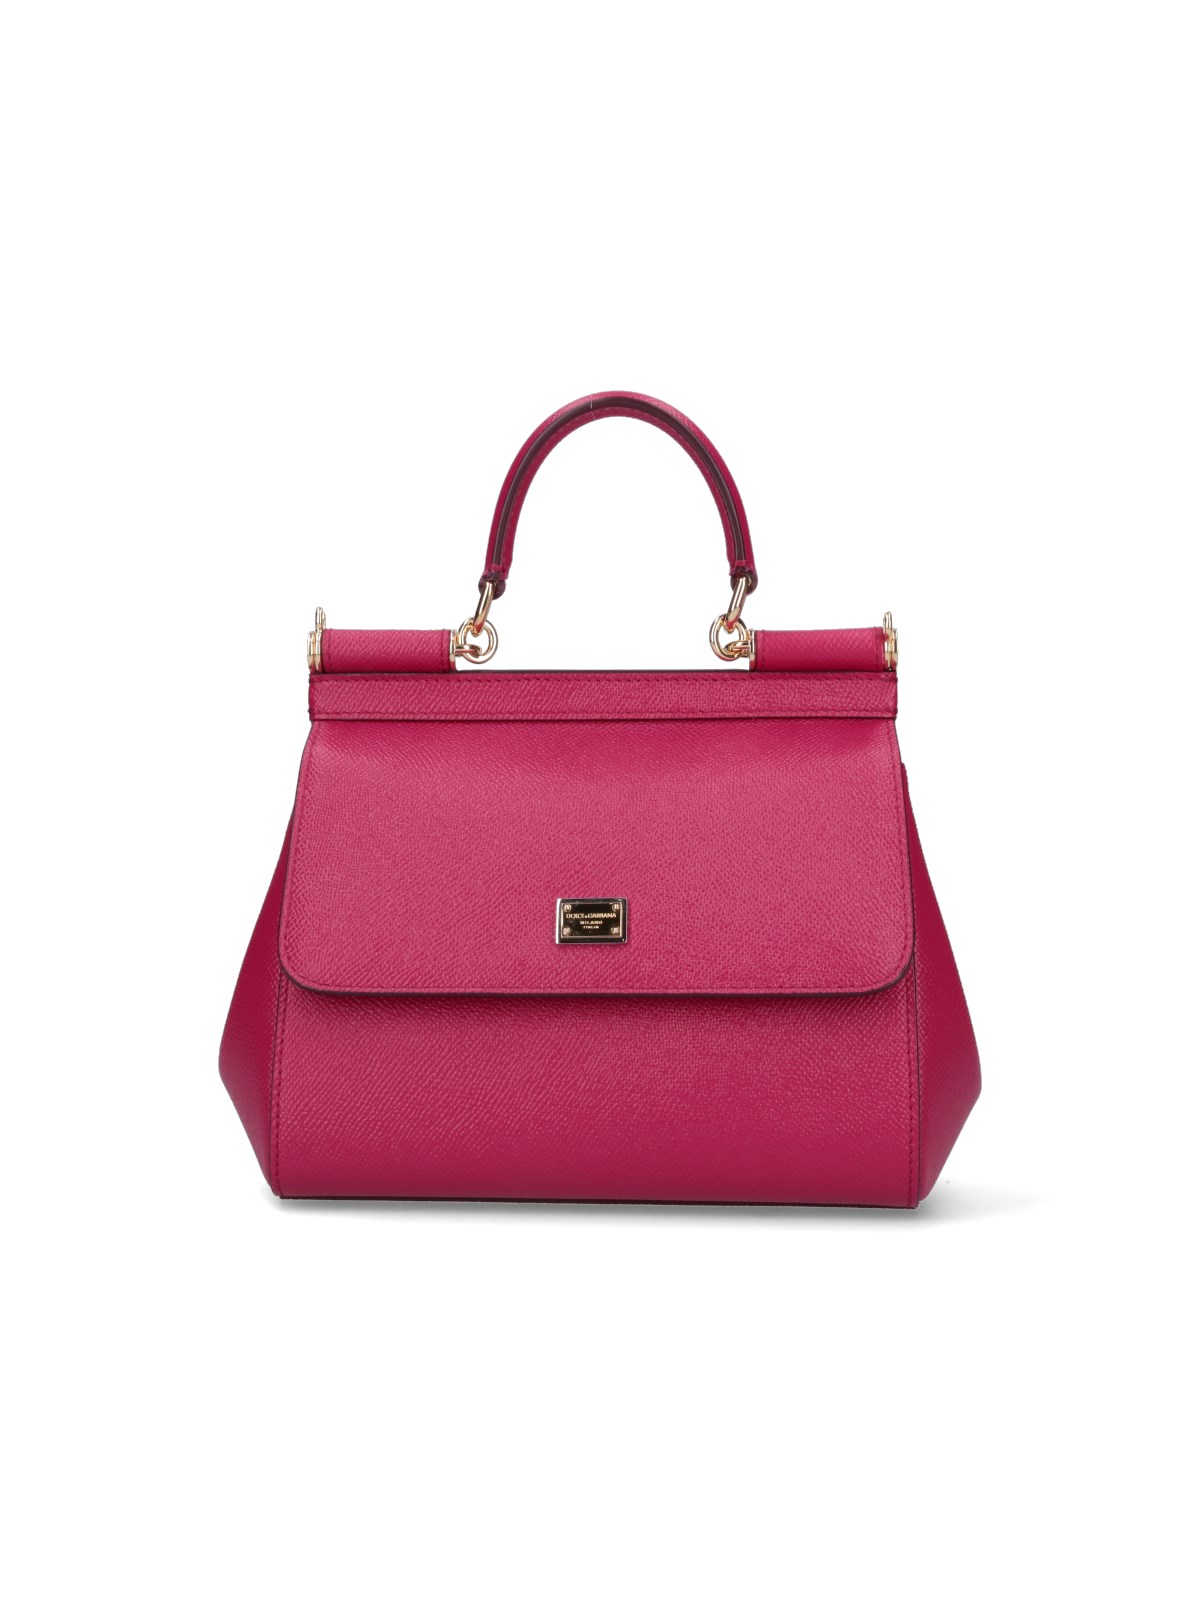 Dolce & Gabbana Sicily Medium Leather Bag In Pink